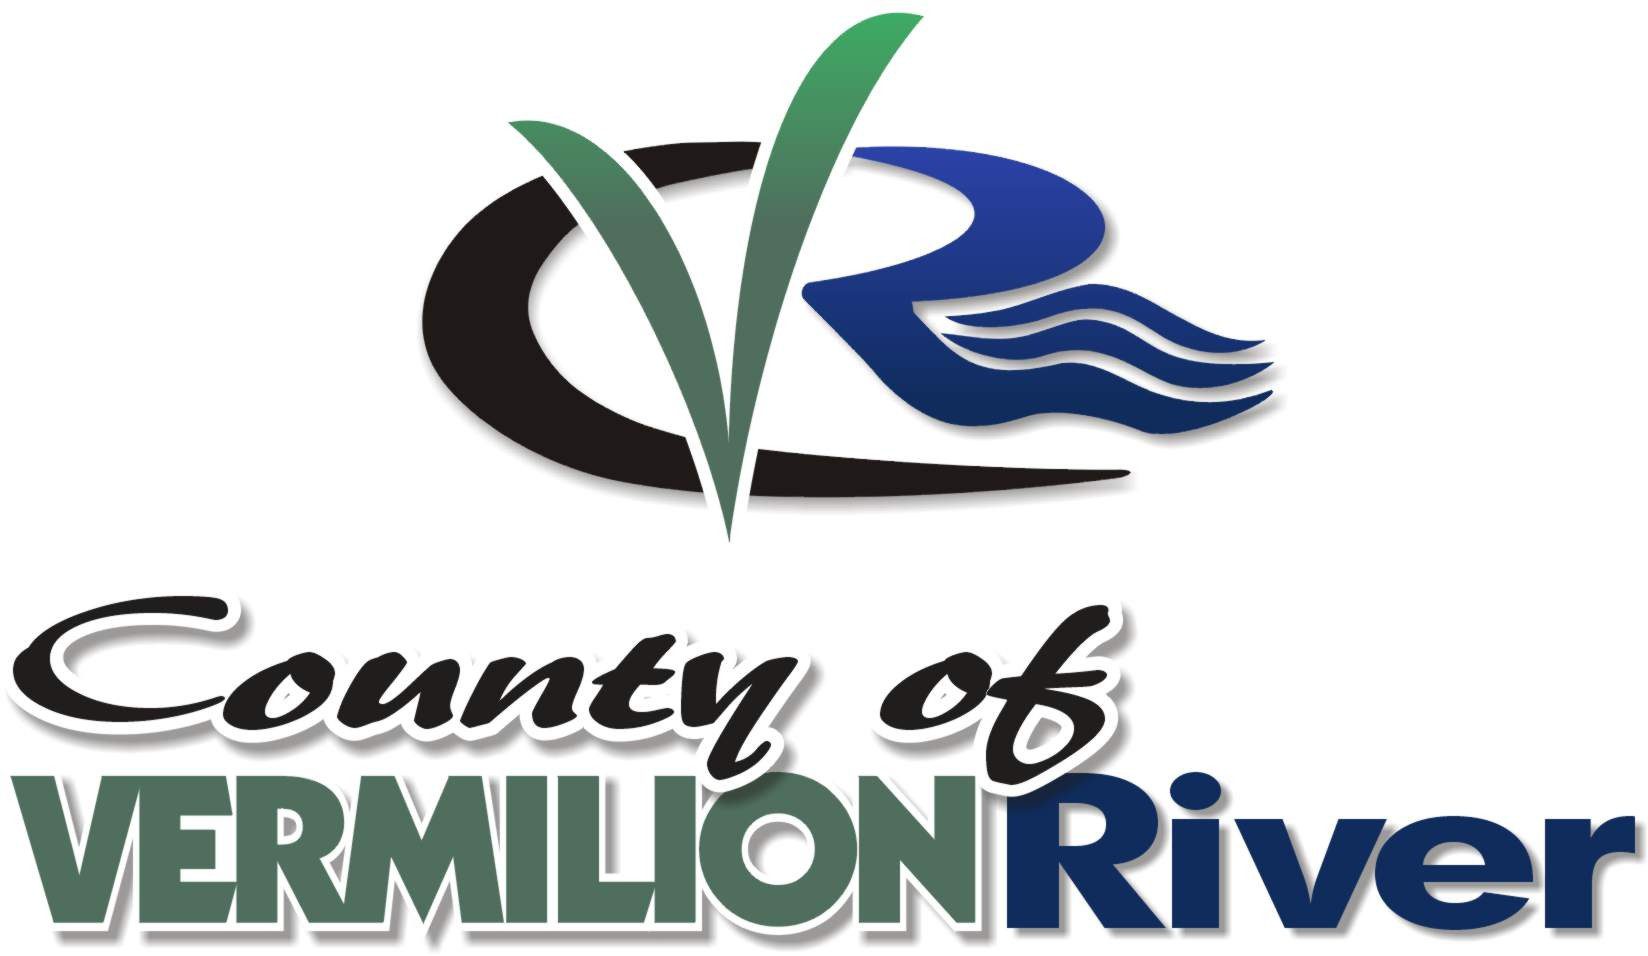 A logo for the county of hamilton river.